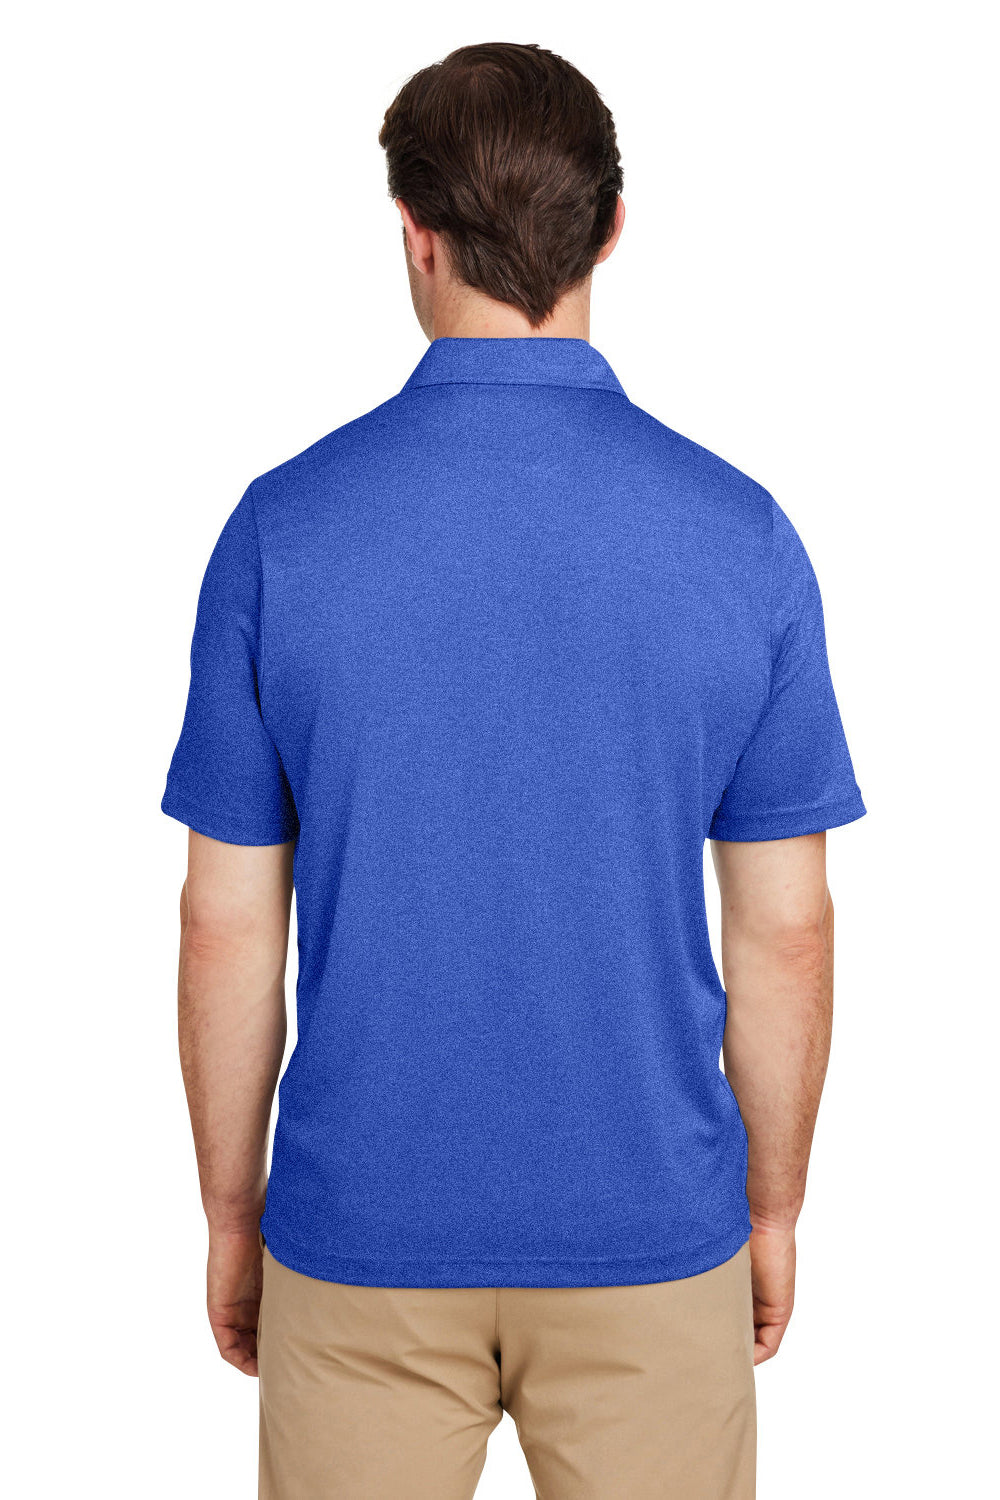 Team 365 TT51H Mens Zone Sonic Moisture Wicking Short Sleeve Polo Shirt Heather Royal Blue Back